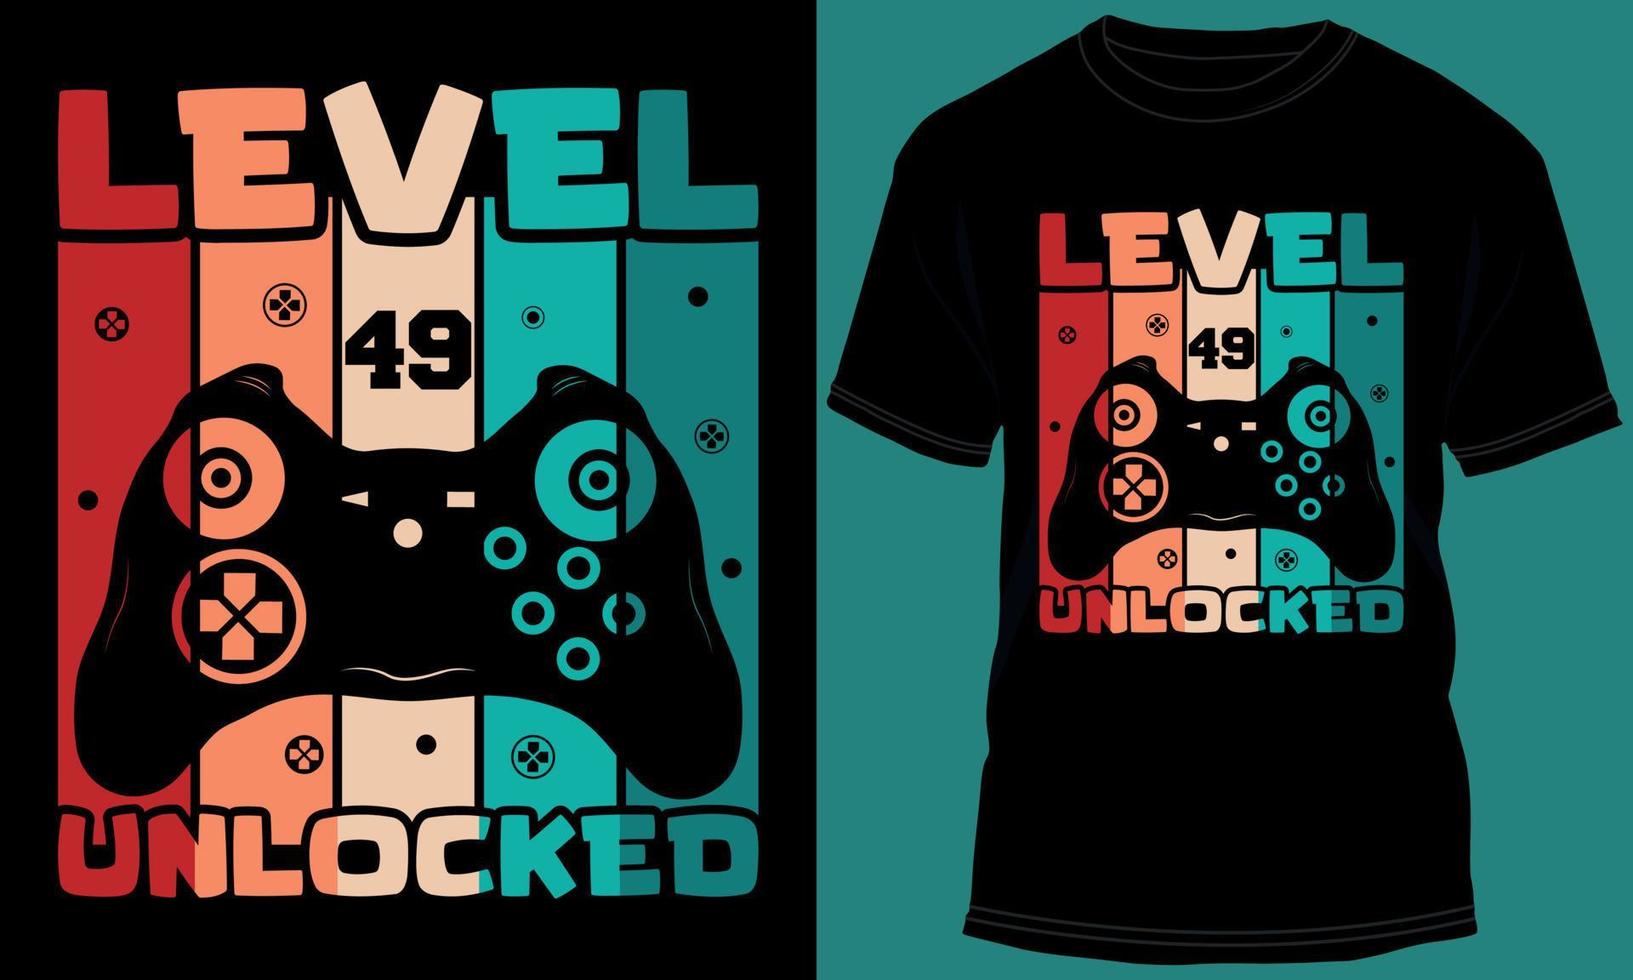 Spieler oder Spielen Niveau 49 freigeschaltet T-Shirt Design vektor